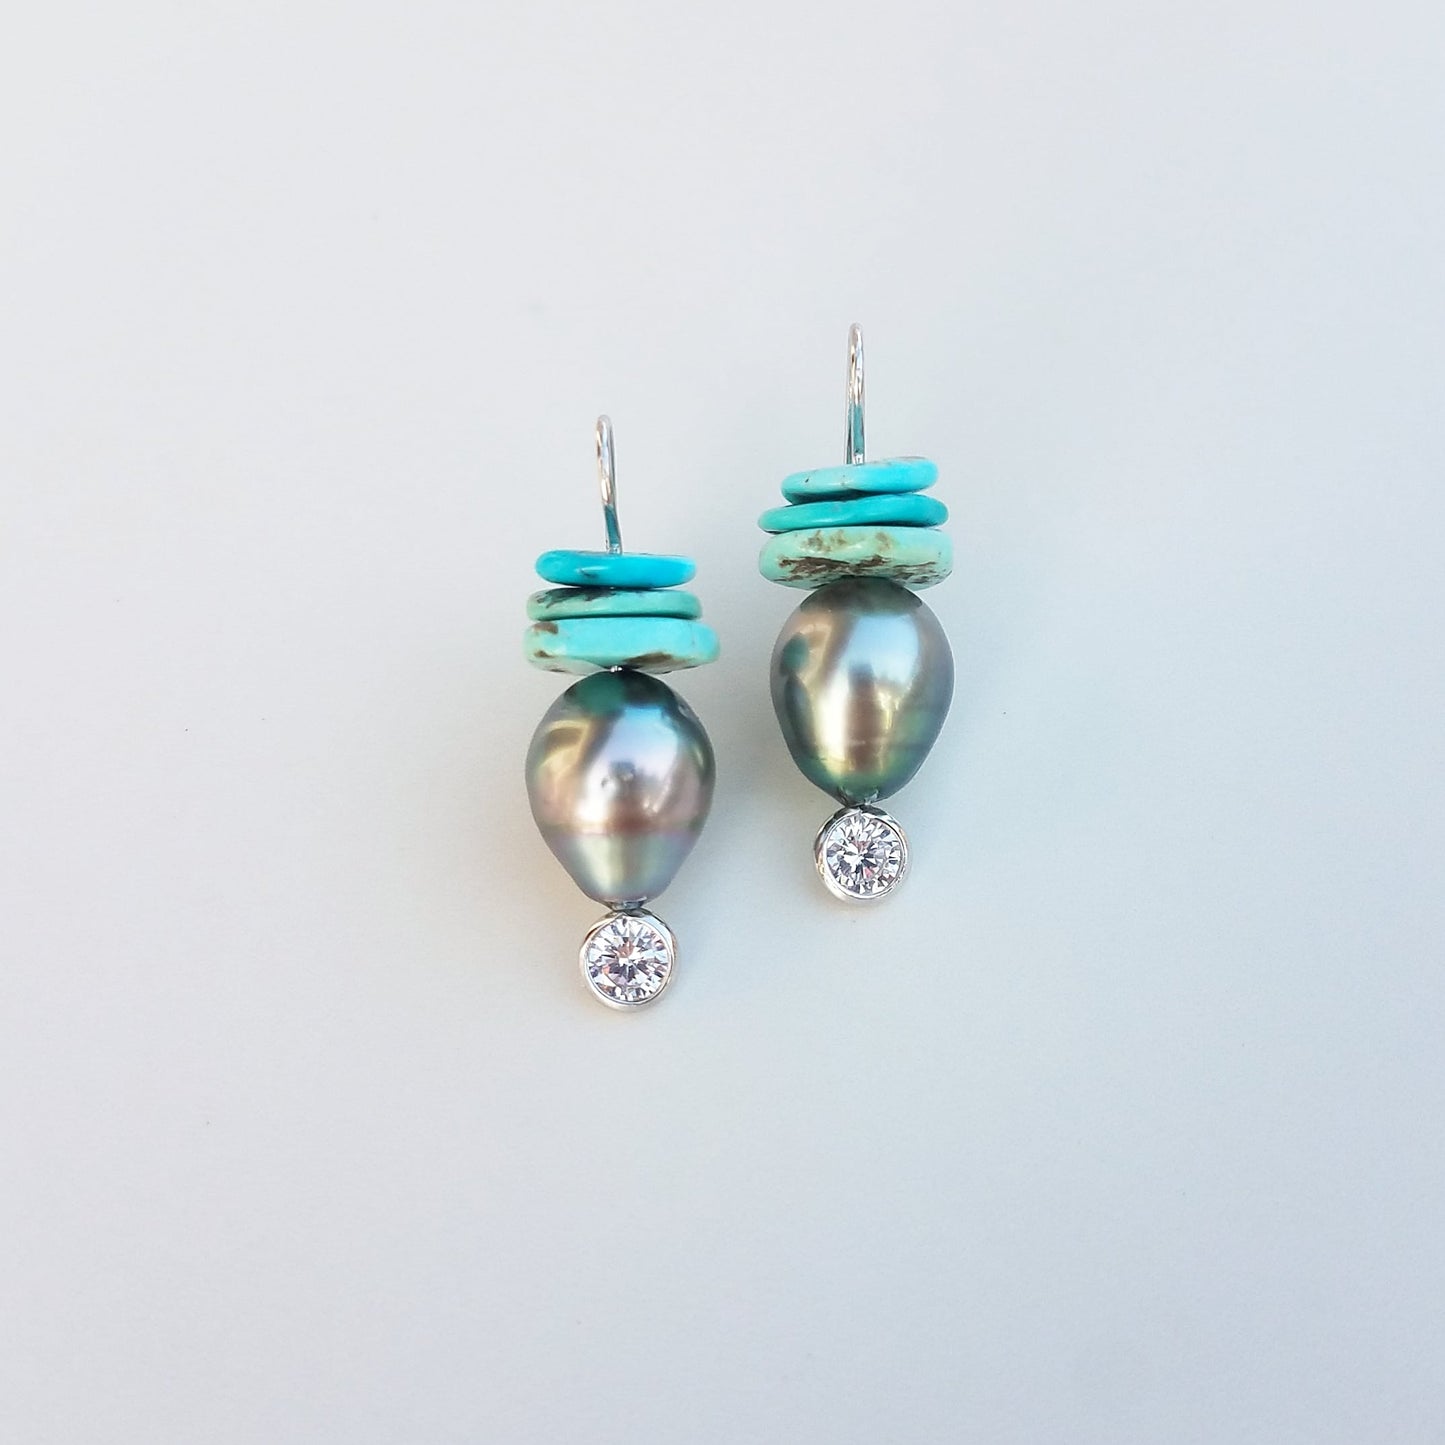 Light Tahitian Pearl & Turquoise Earrings